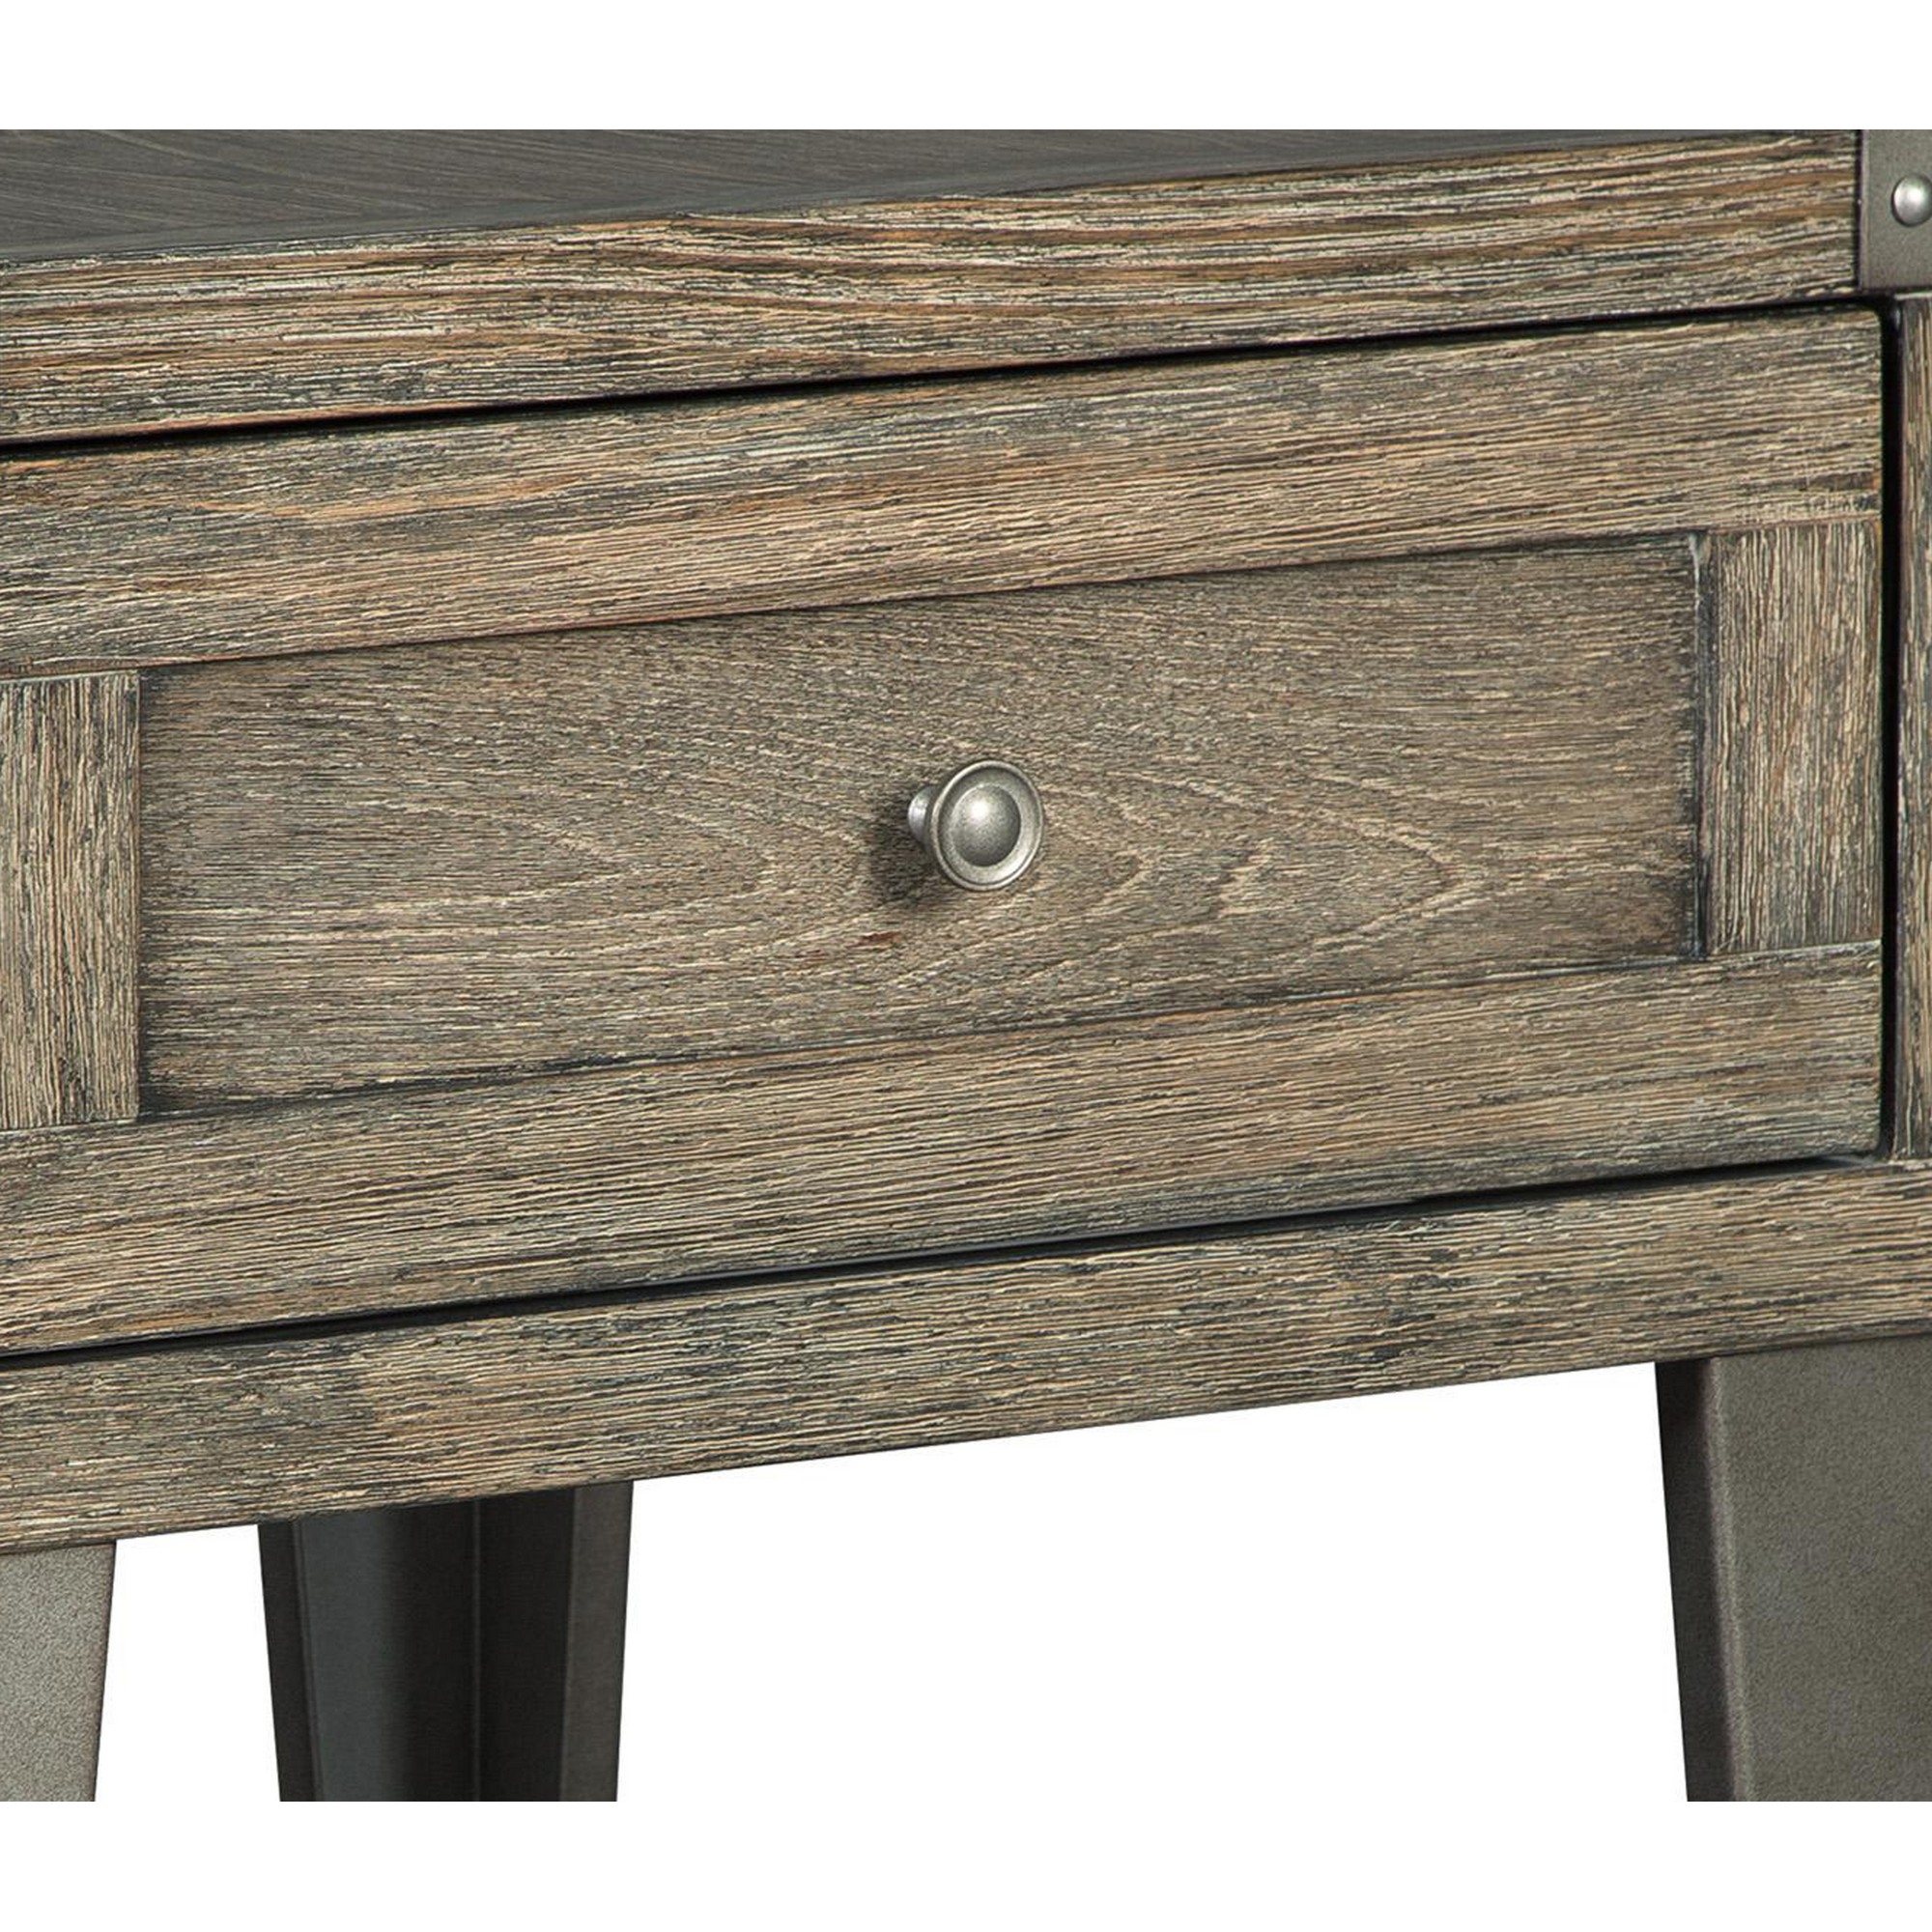 Rectangular Wooden End Table With 1 Drawer And Corner Metal Brackets, Brown- Saltoro Sherpi